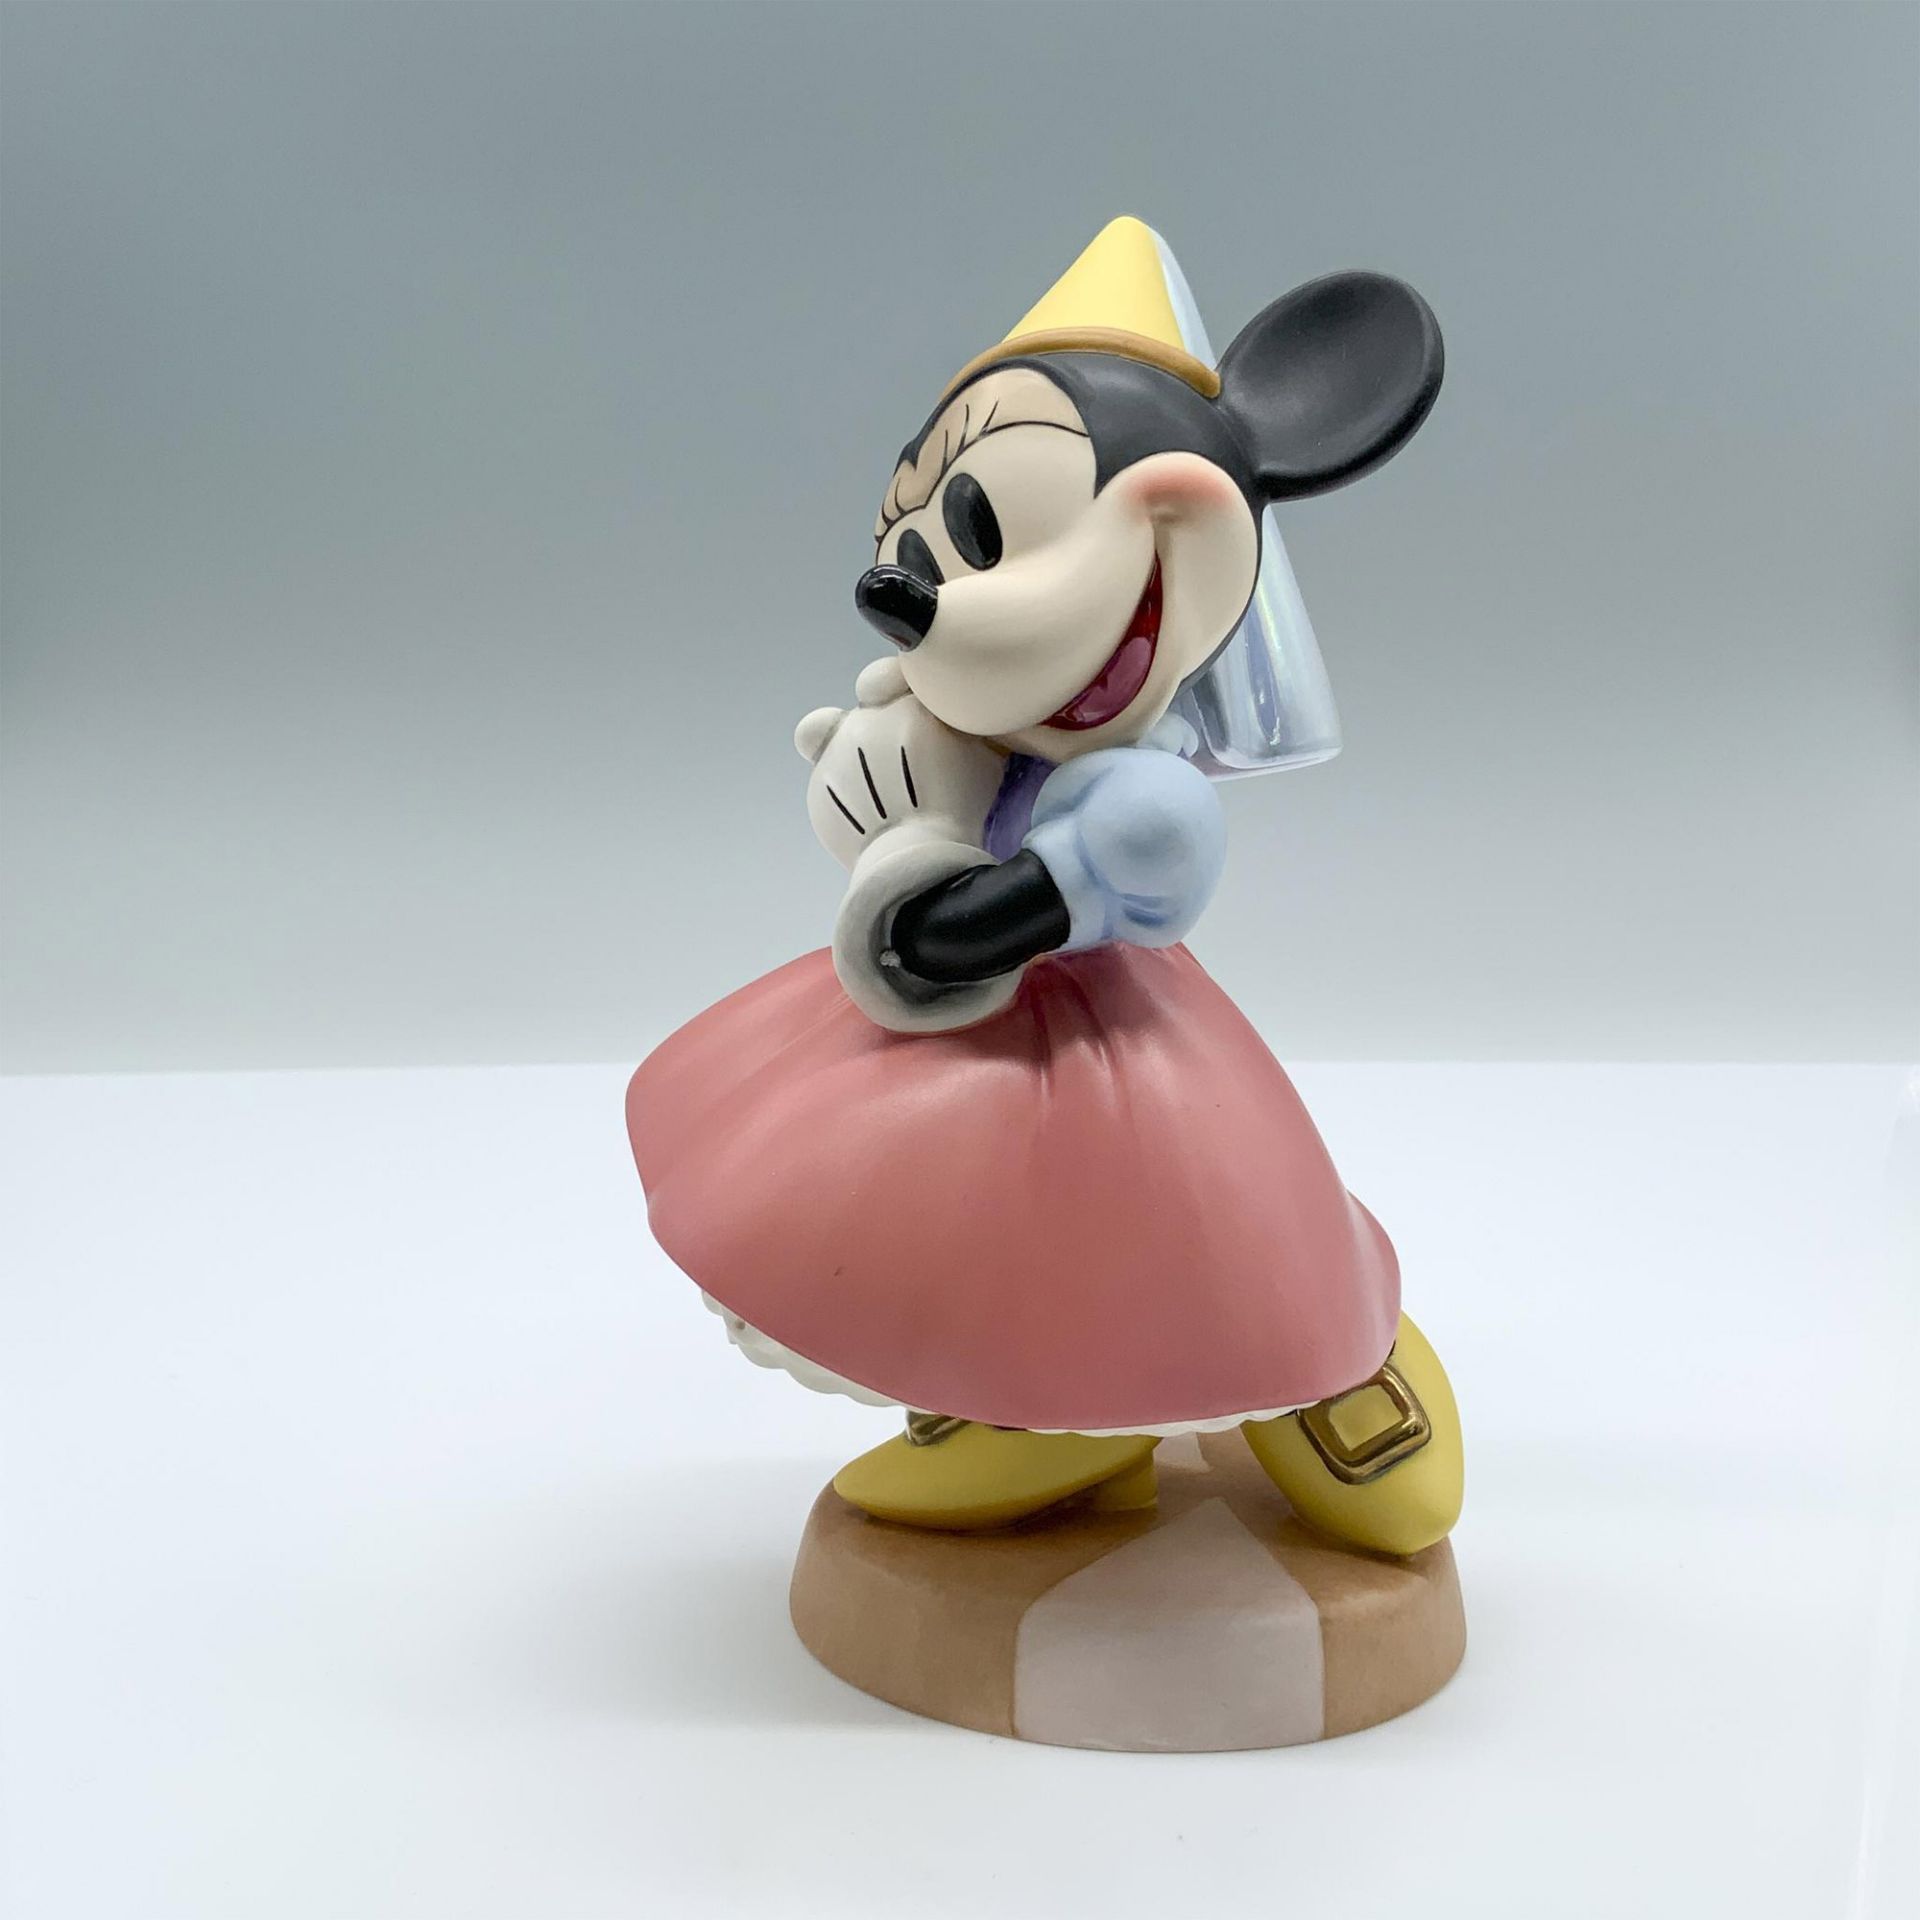 Walt Disney Classics Figurine, Princess Minnie - Image 2 of 6